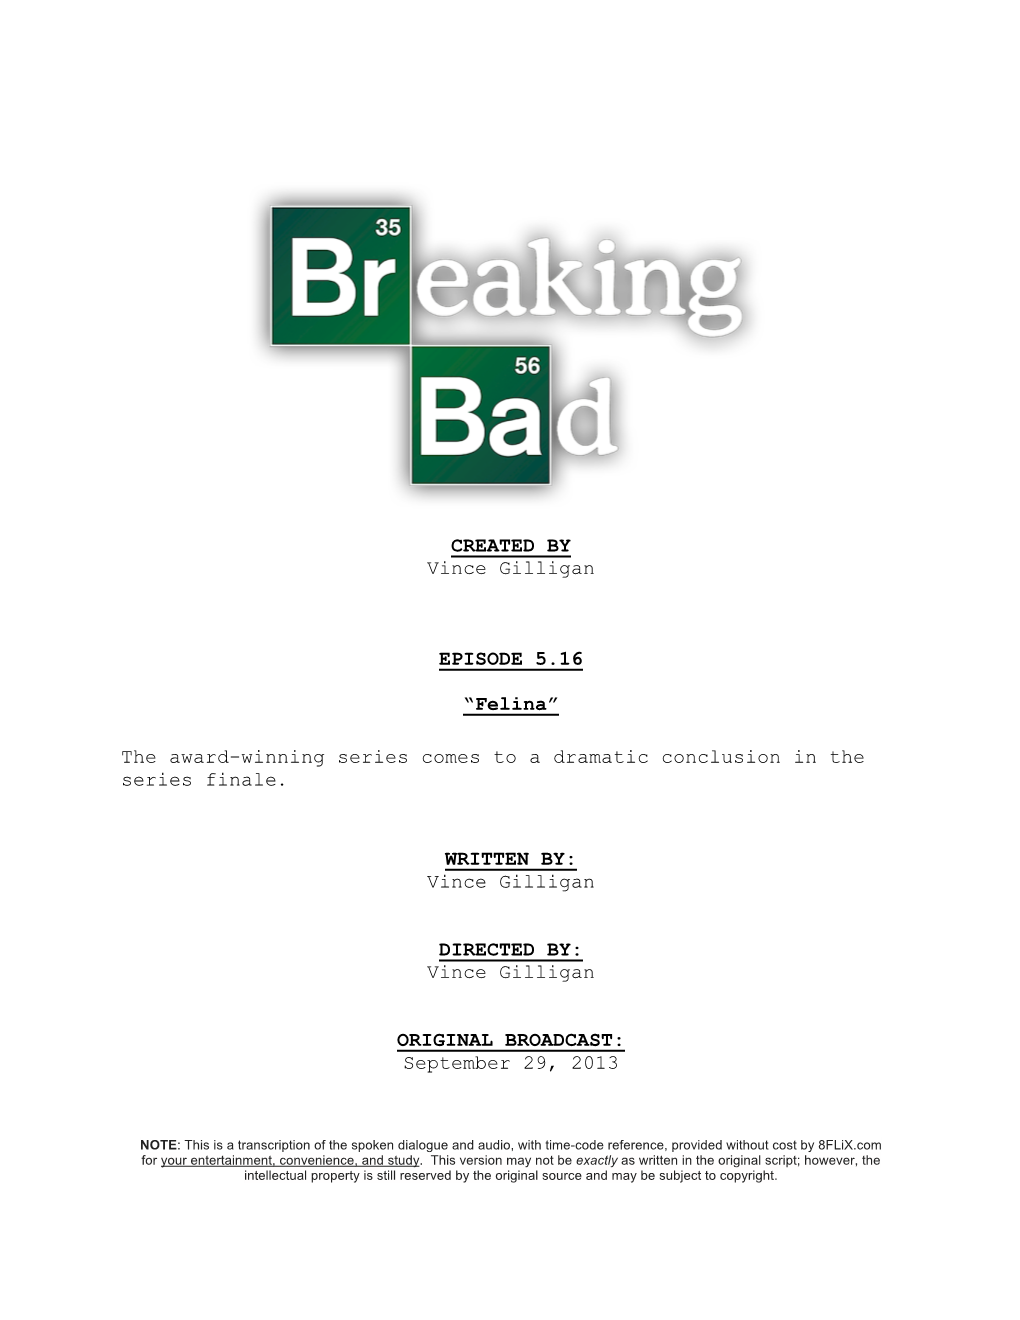 Breaking Bad | Dialogue Transcript | S5:E16